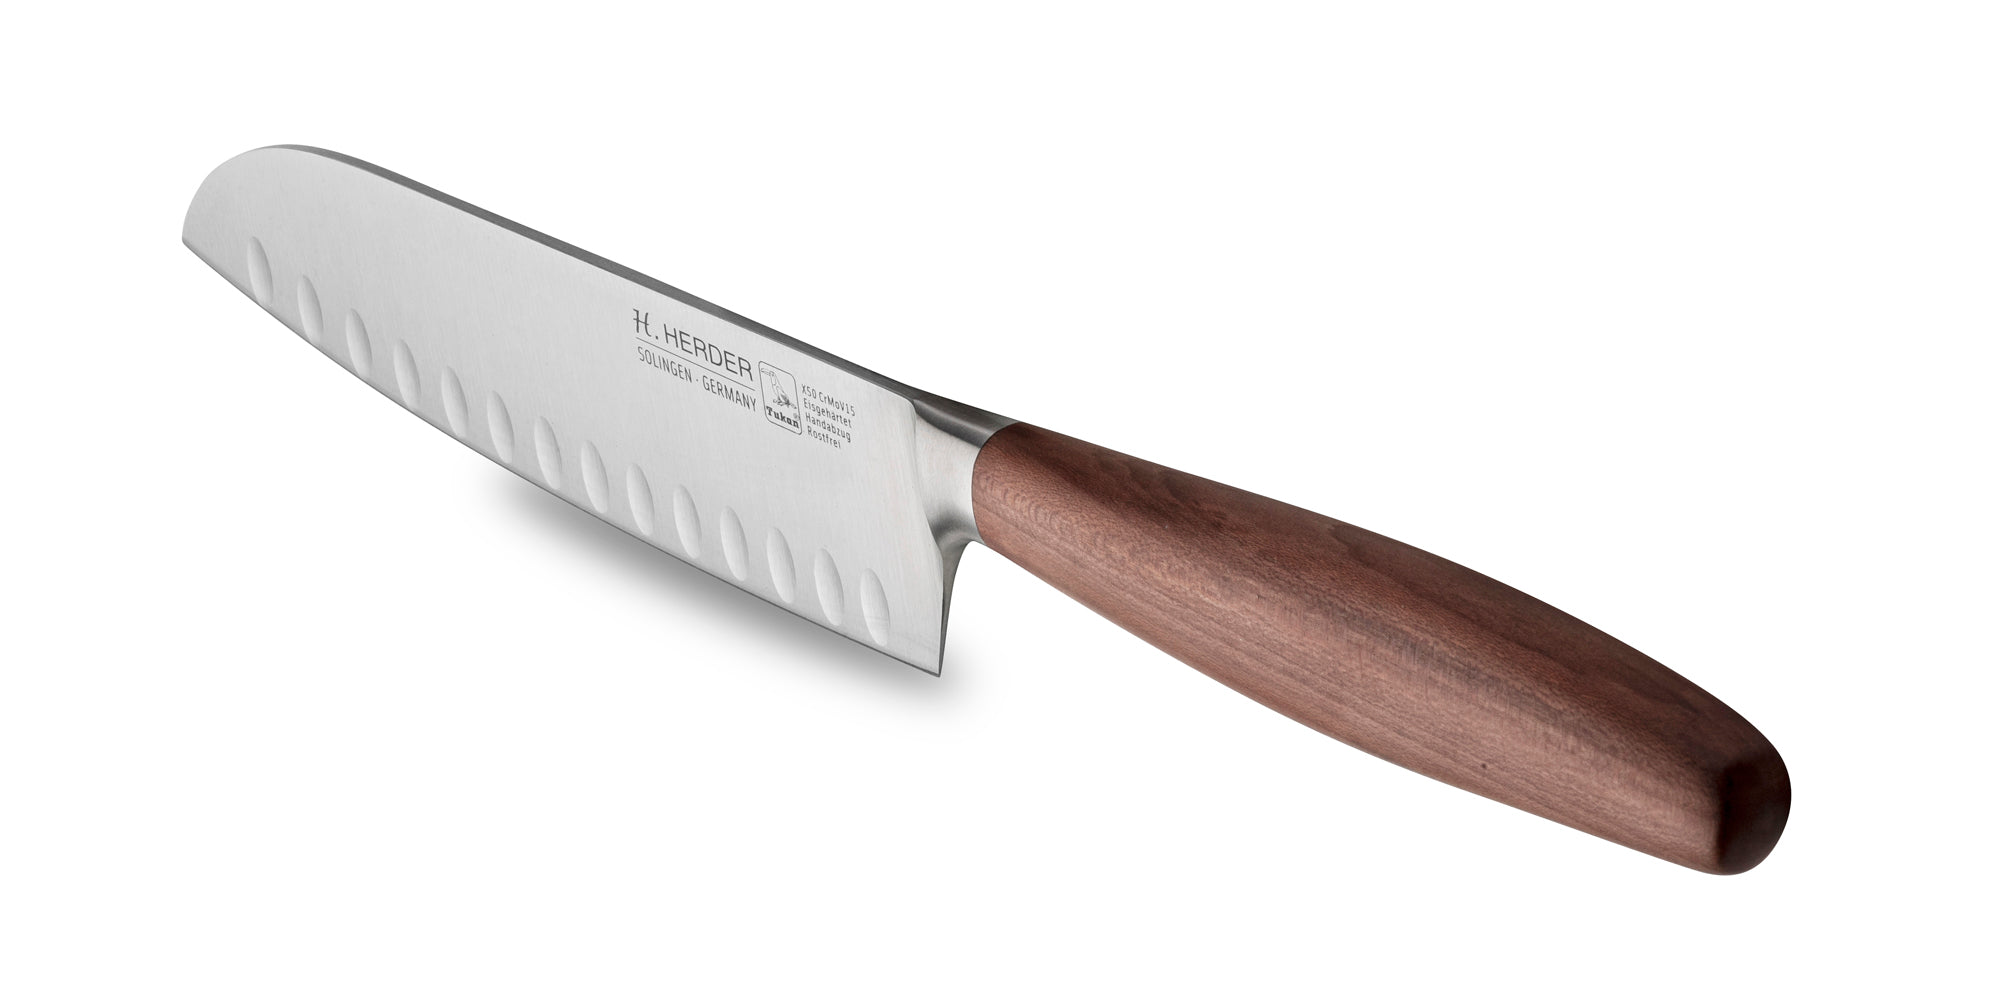 Santoku knife Eterno, plum wood, blade length 16cm, forged, fluted edge